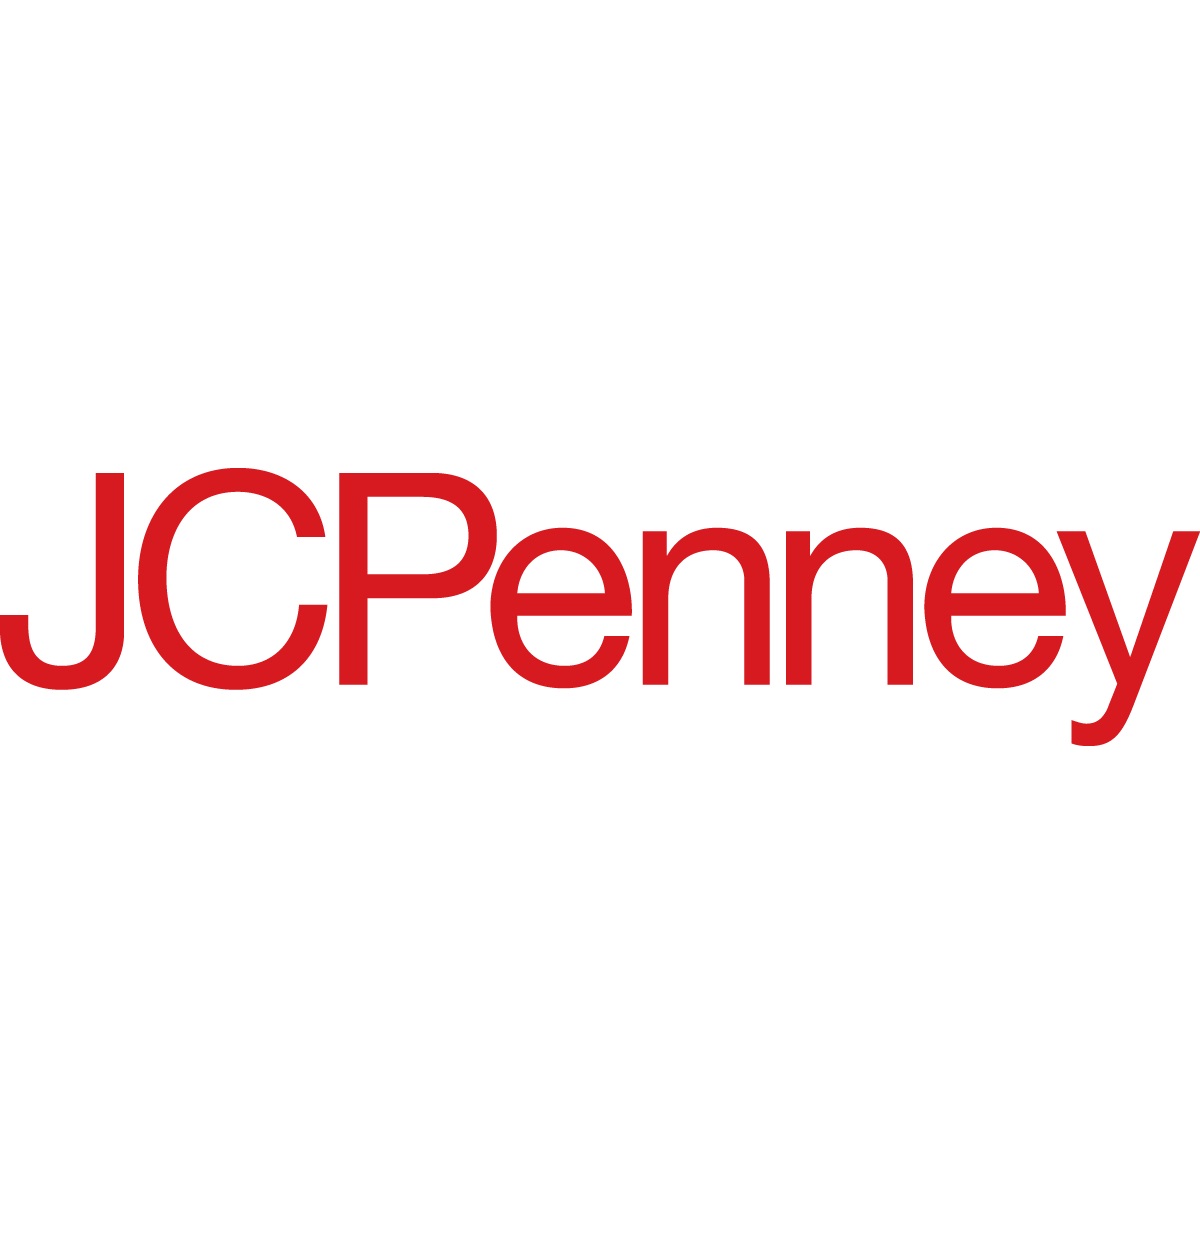 jcpenney-logo-2015